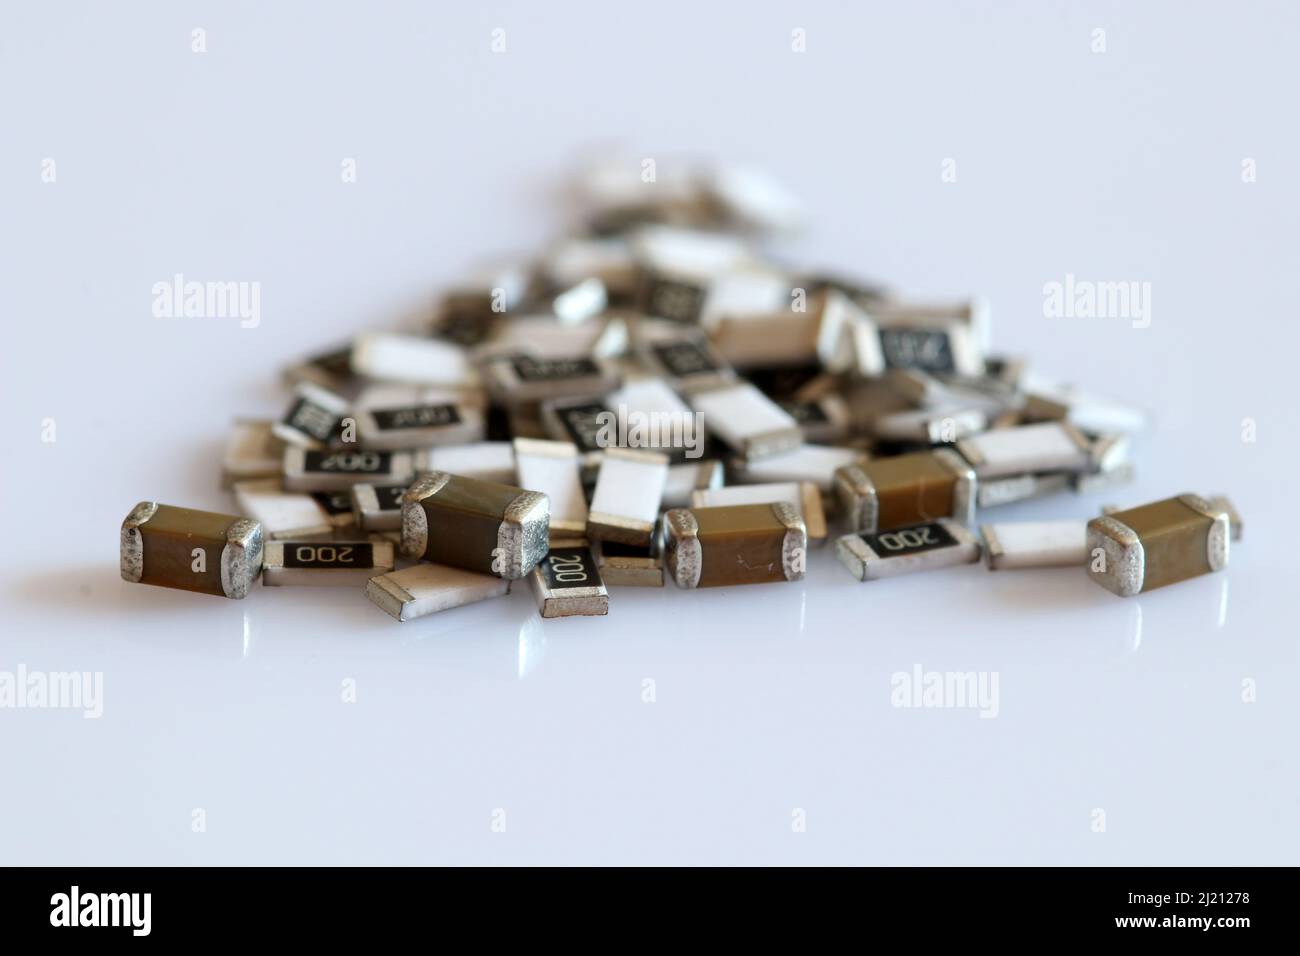 SMD electronic parts on white background. Stock Photo